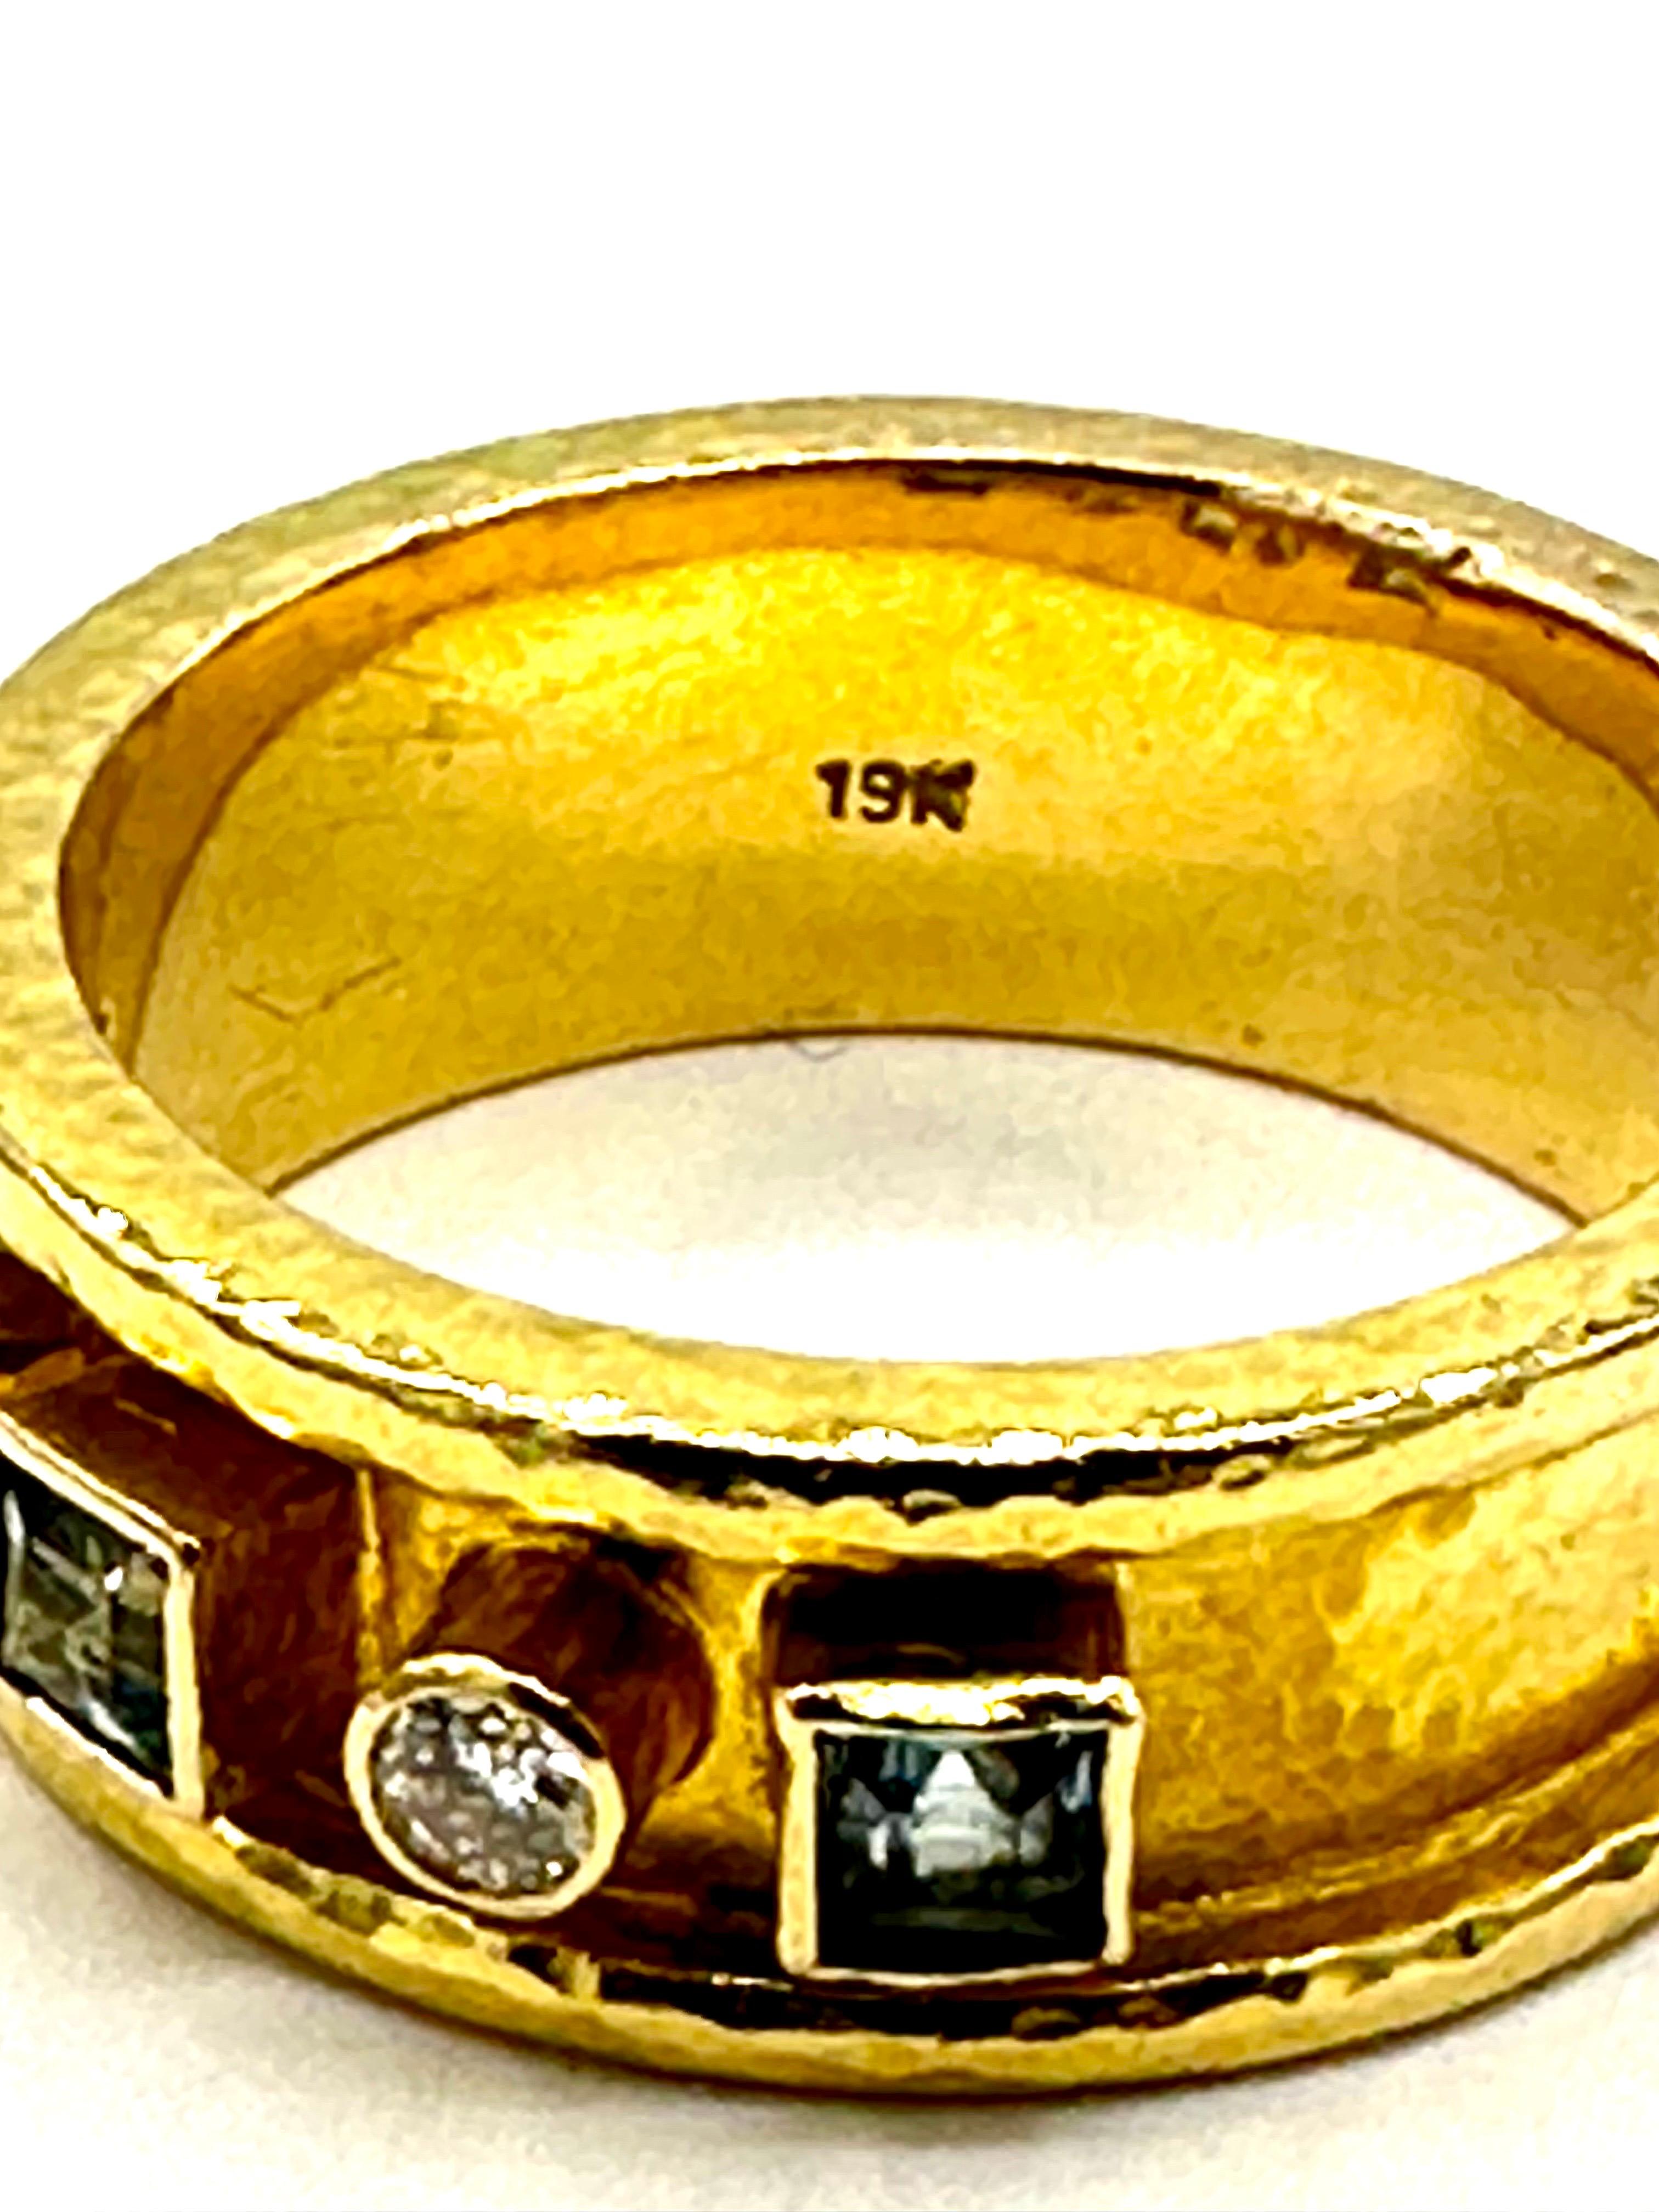 Women's or Men's Elizabeth Locke Aquamarine and Diamond 19K Textured Yellow Gold Band Ring For Sale